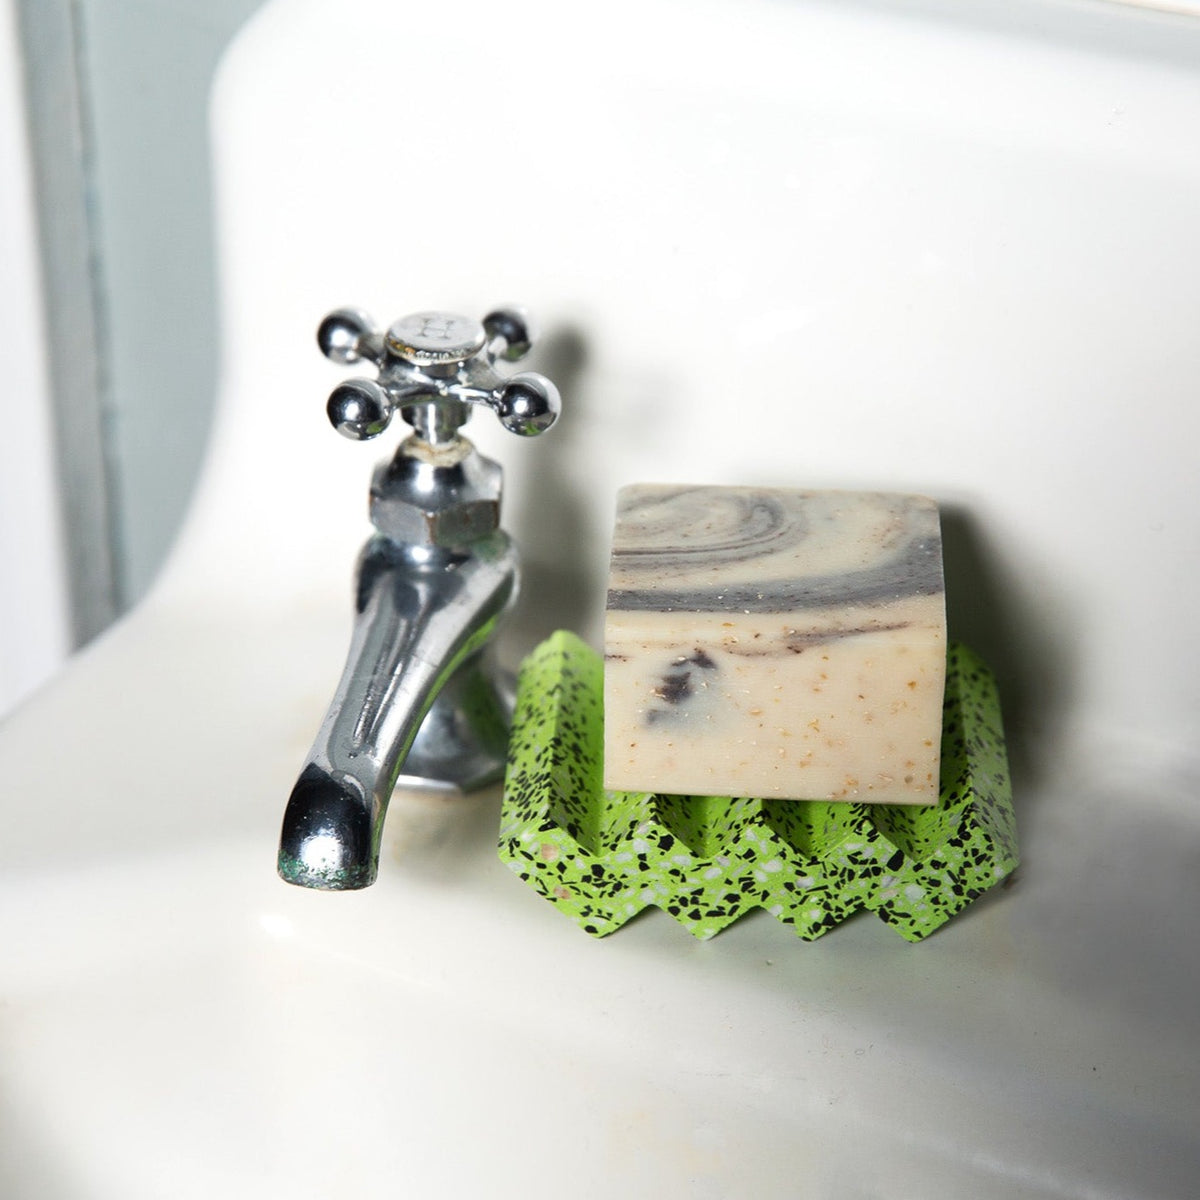 Concrete Soap Dish - Draining Soap Holder - Bathroom Accessories